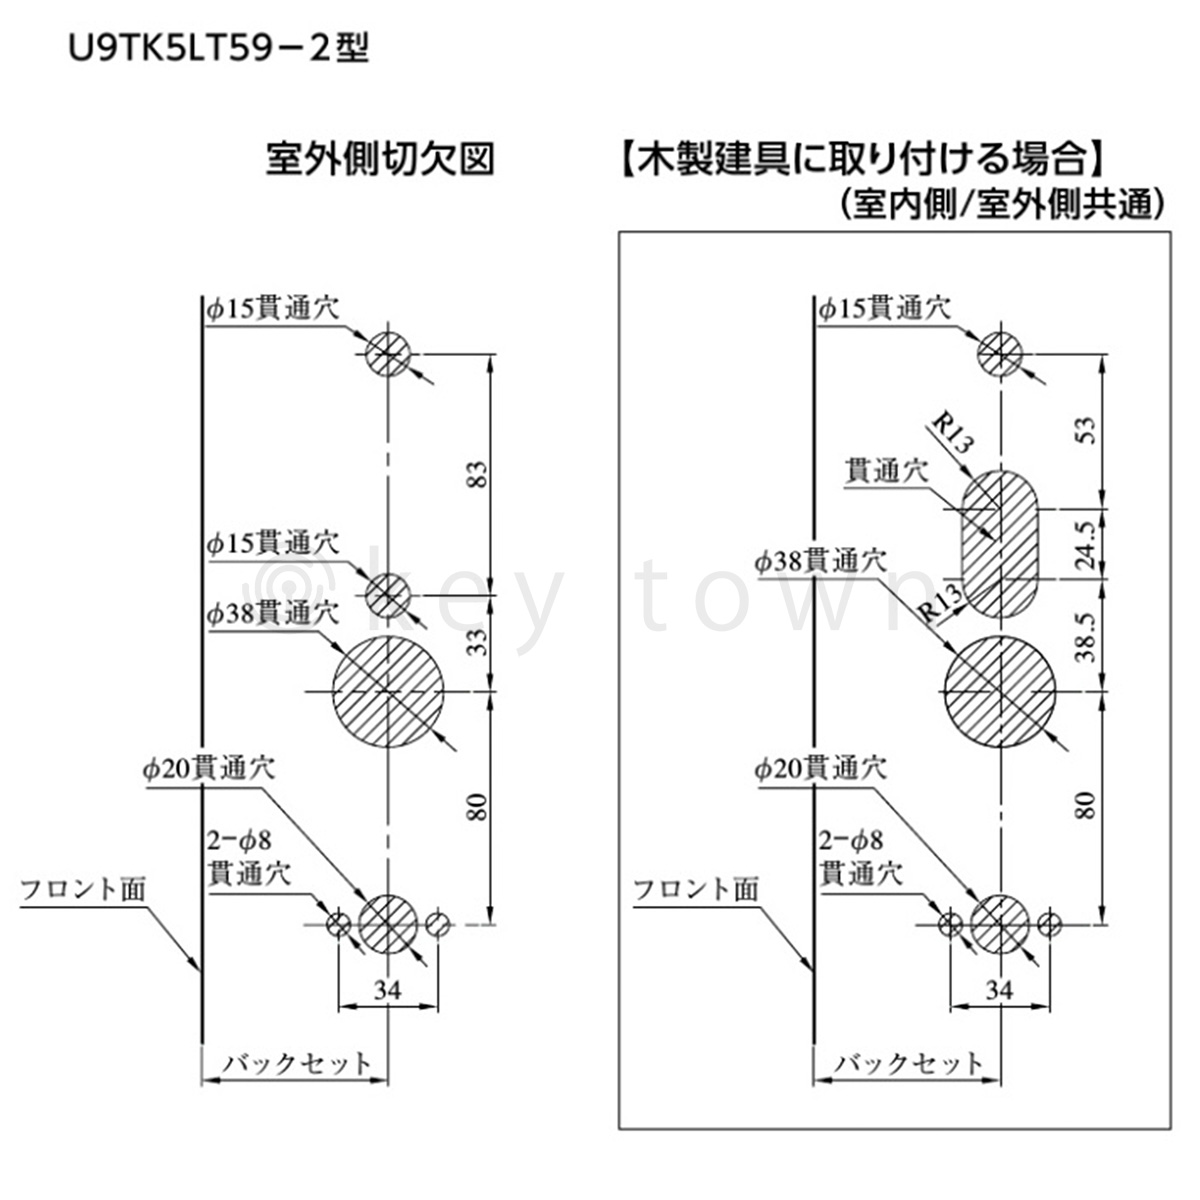 MIWA【美和ロック】 U9TK5LT59-2 BK 自動施錠型テンキーカードロック